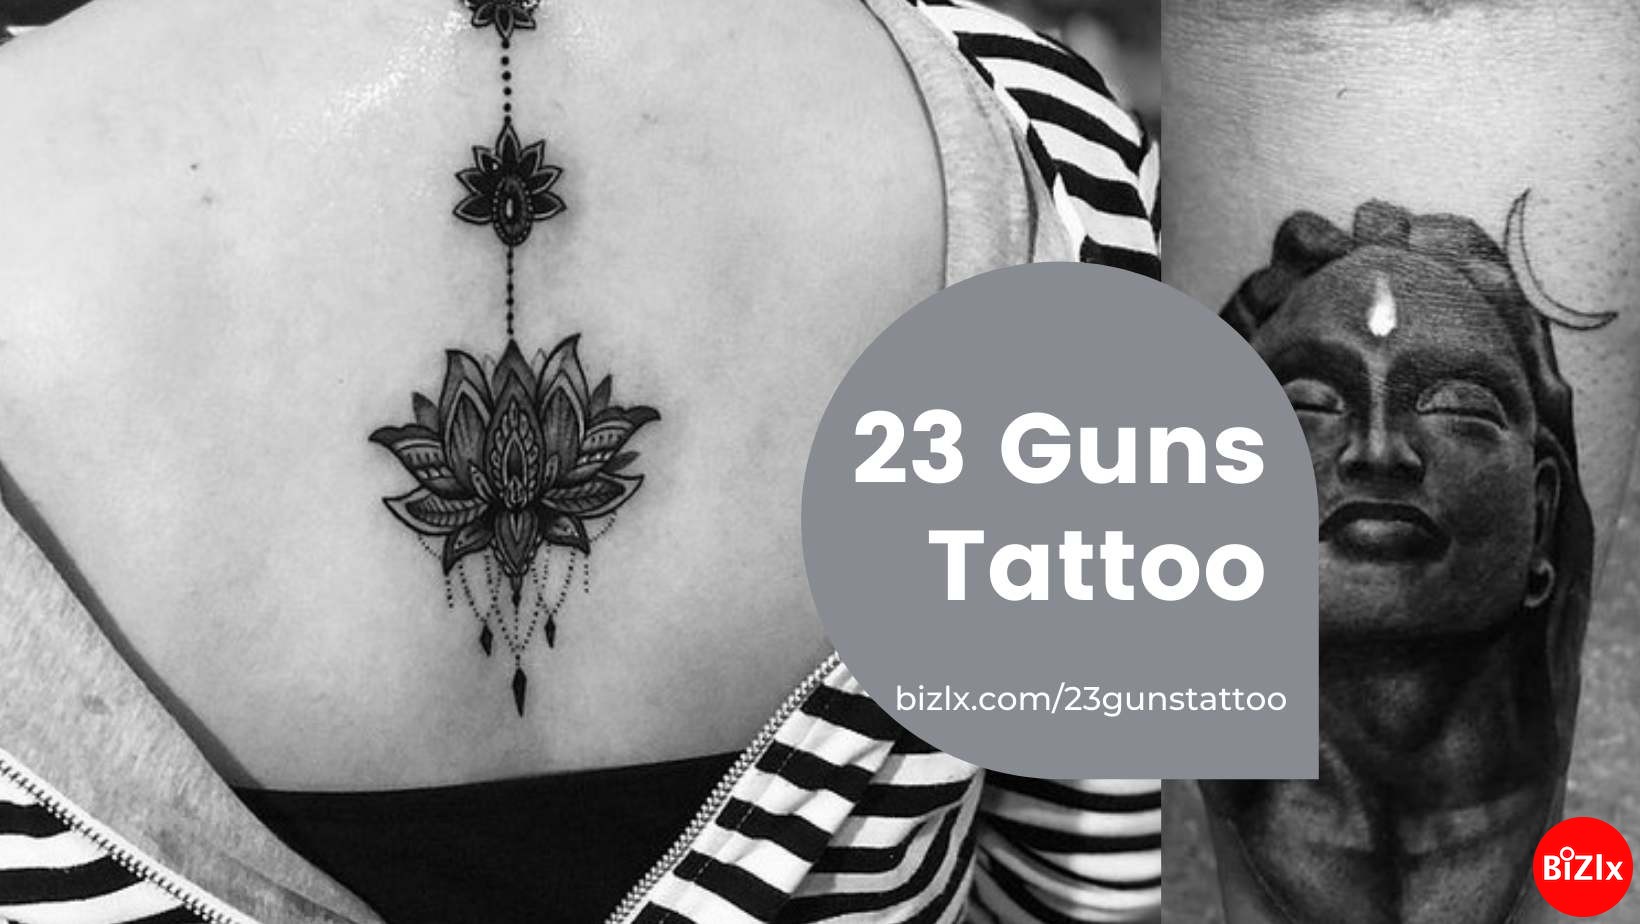 72 Brilliant Gun Tattoos Design On Thigh  Tattoo Designs  TattoosBagcom